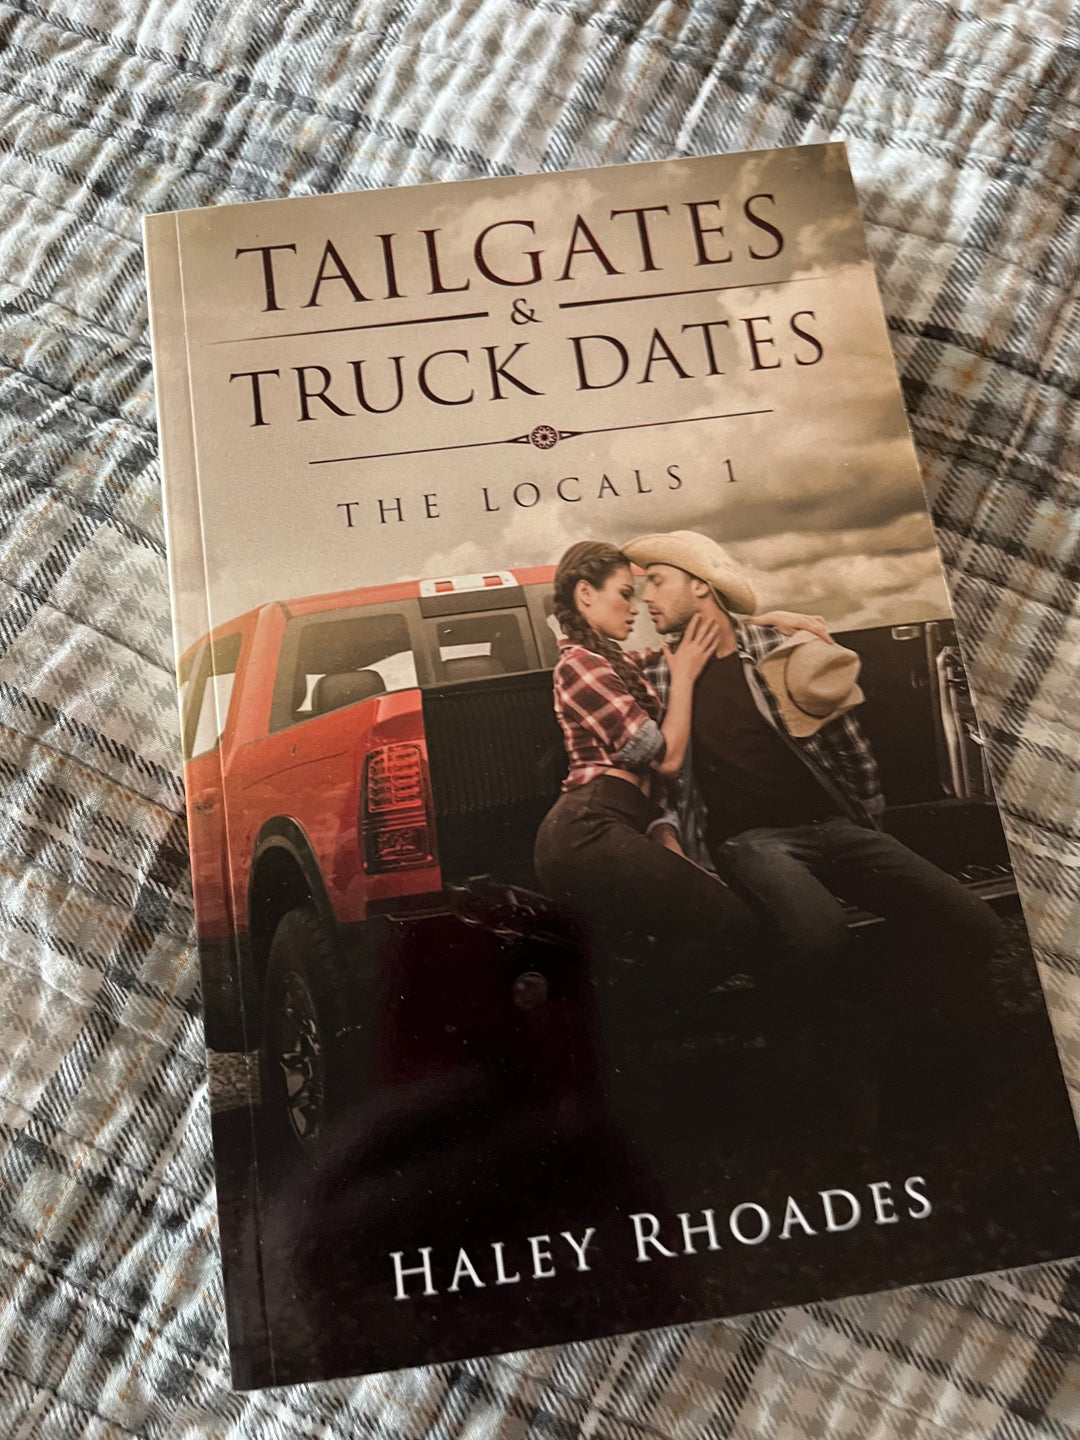 Tailgates & Truck Dates